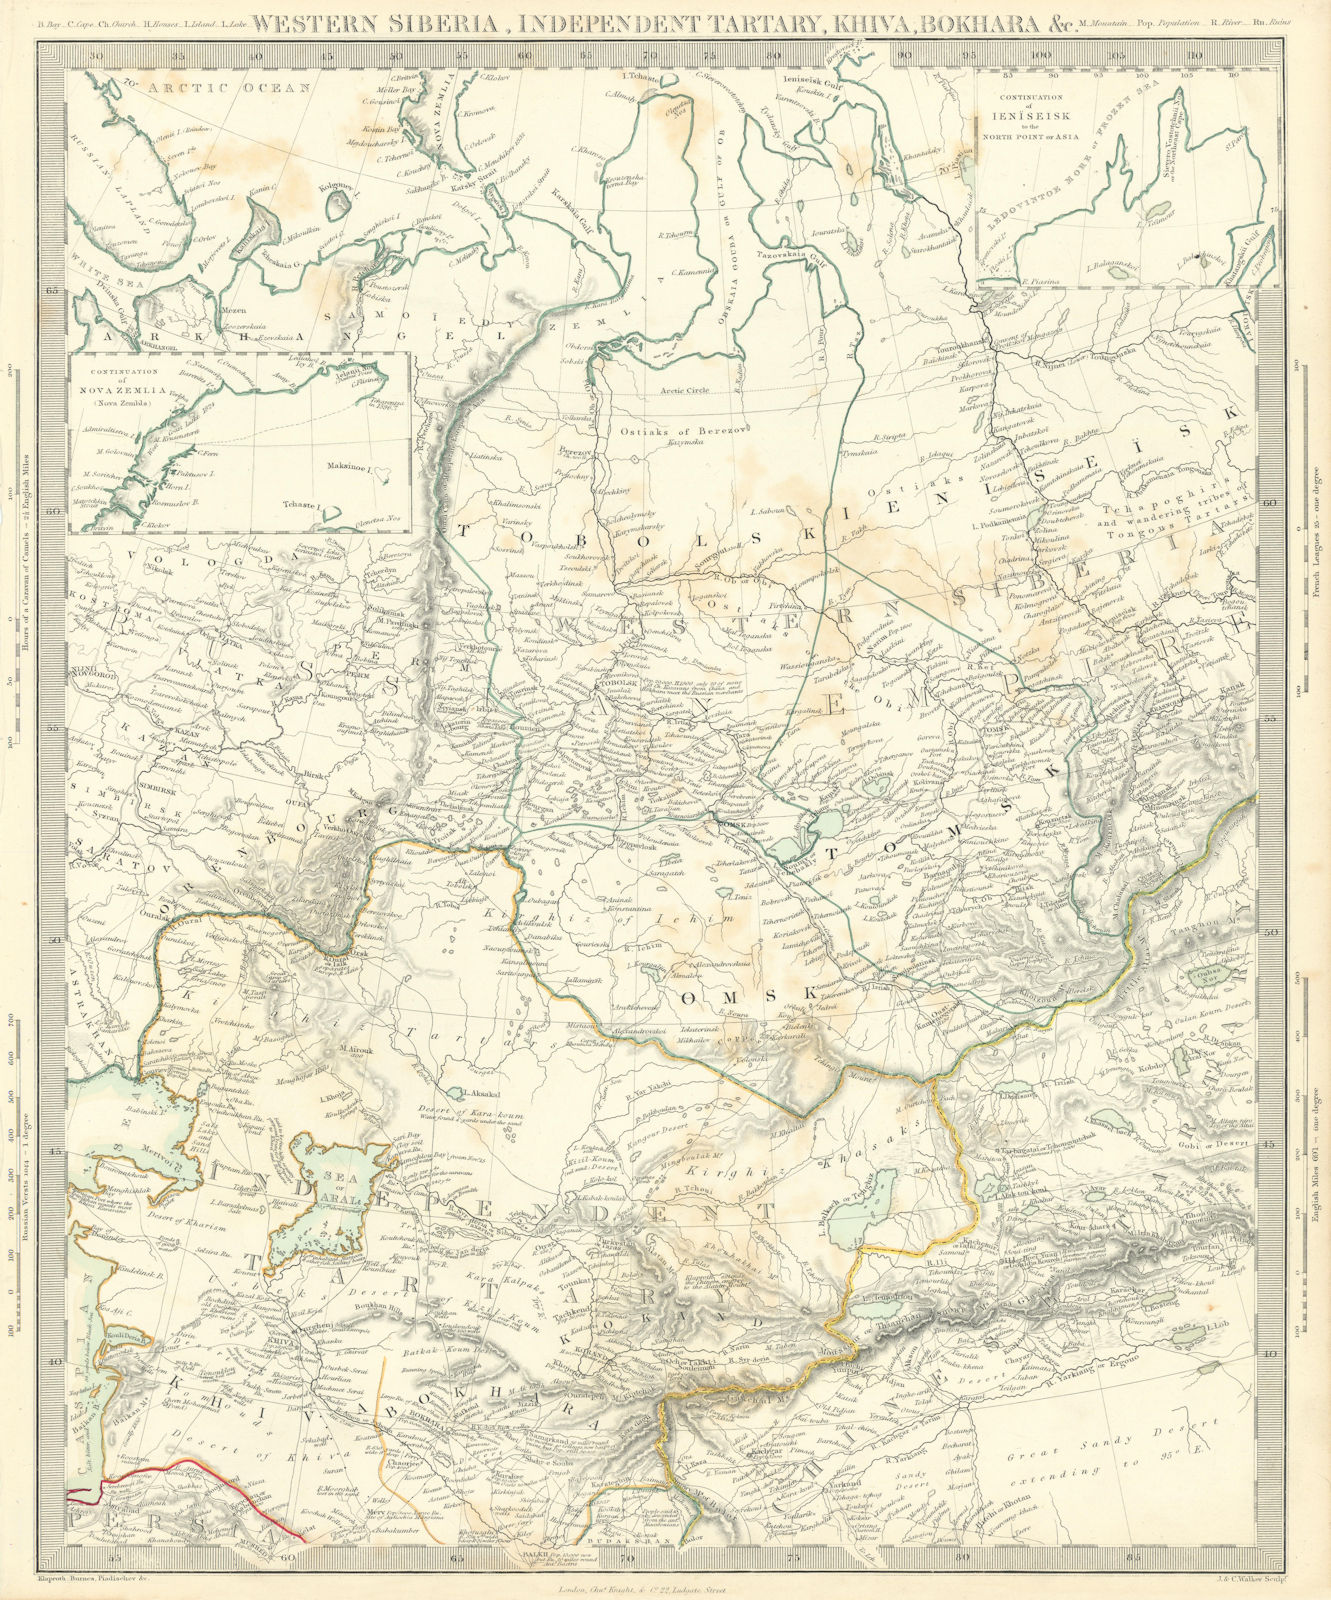 CENTRAL ASIA Western Siberia Bukhara Khiva Independent Tartary SDUK 1844 map